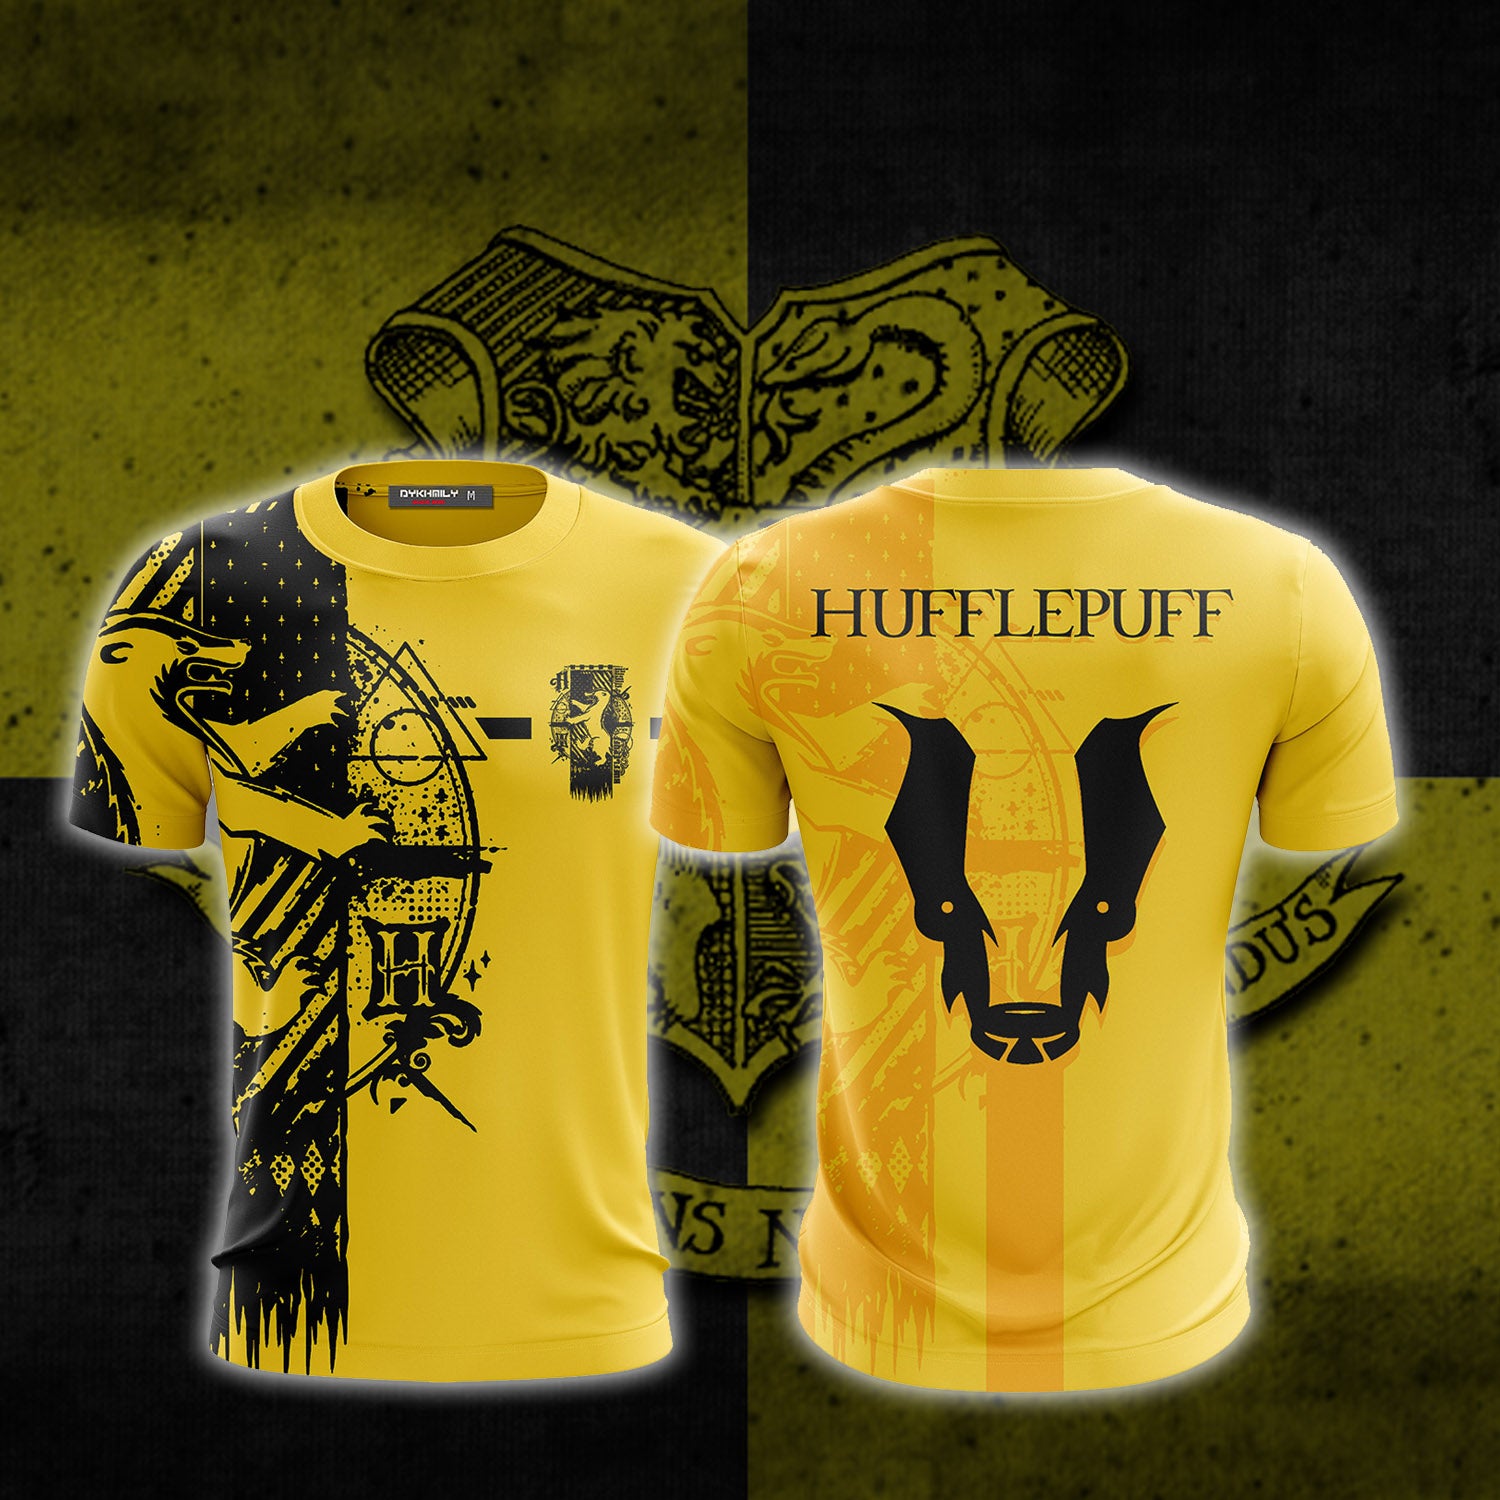 Hufflepuff T-shirt